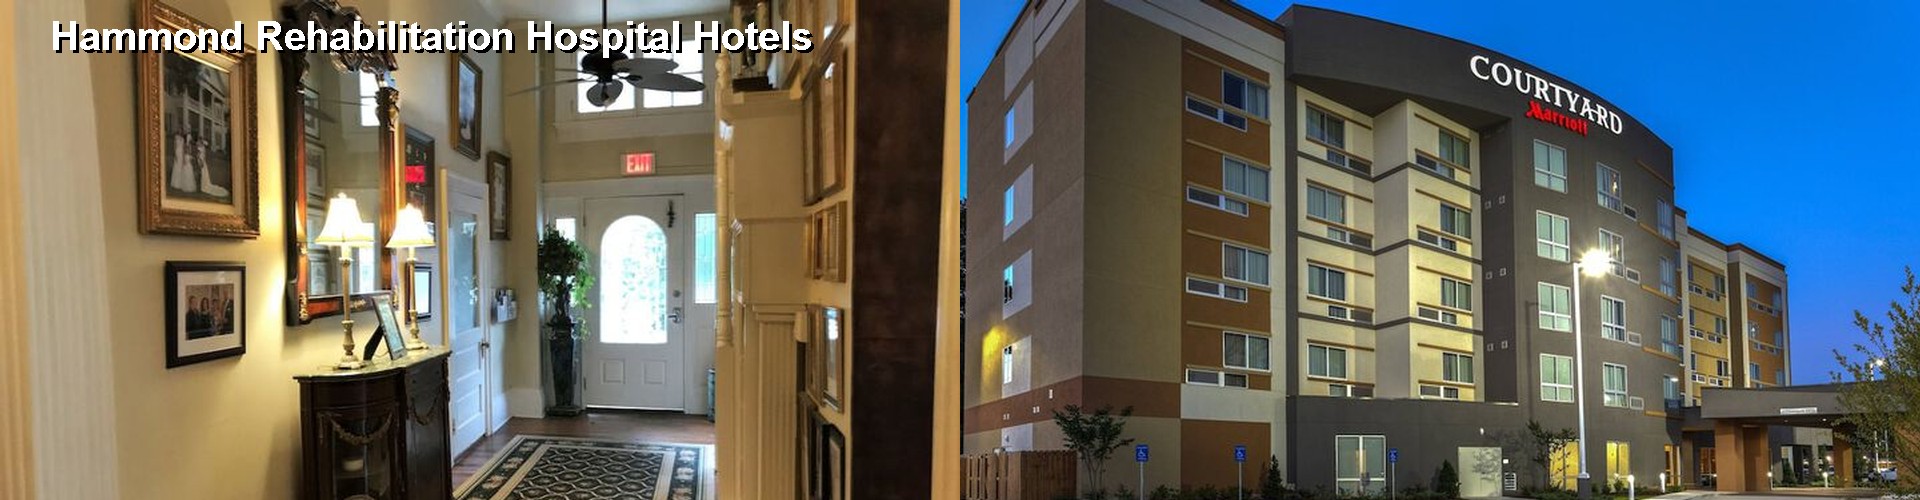 5 Best Hotels near Hammond Rehabilitation Hospital